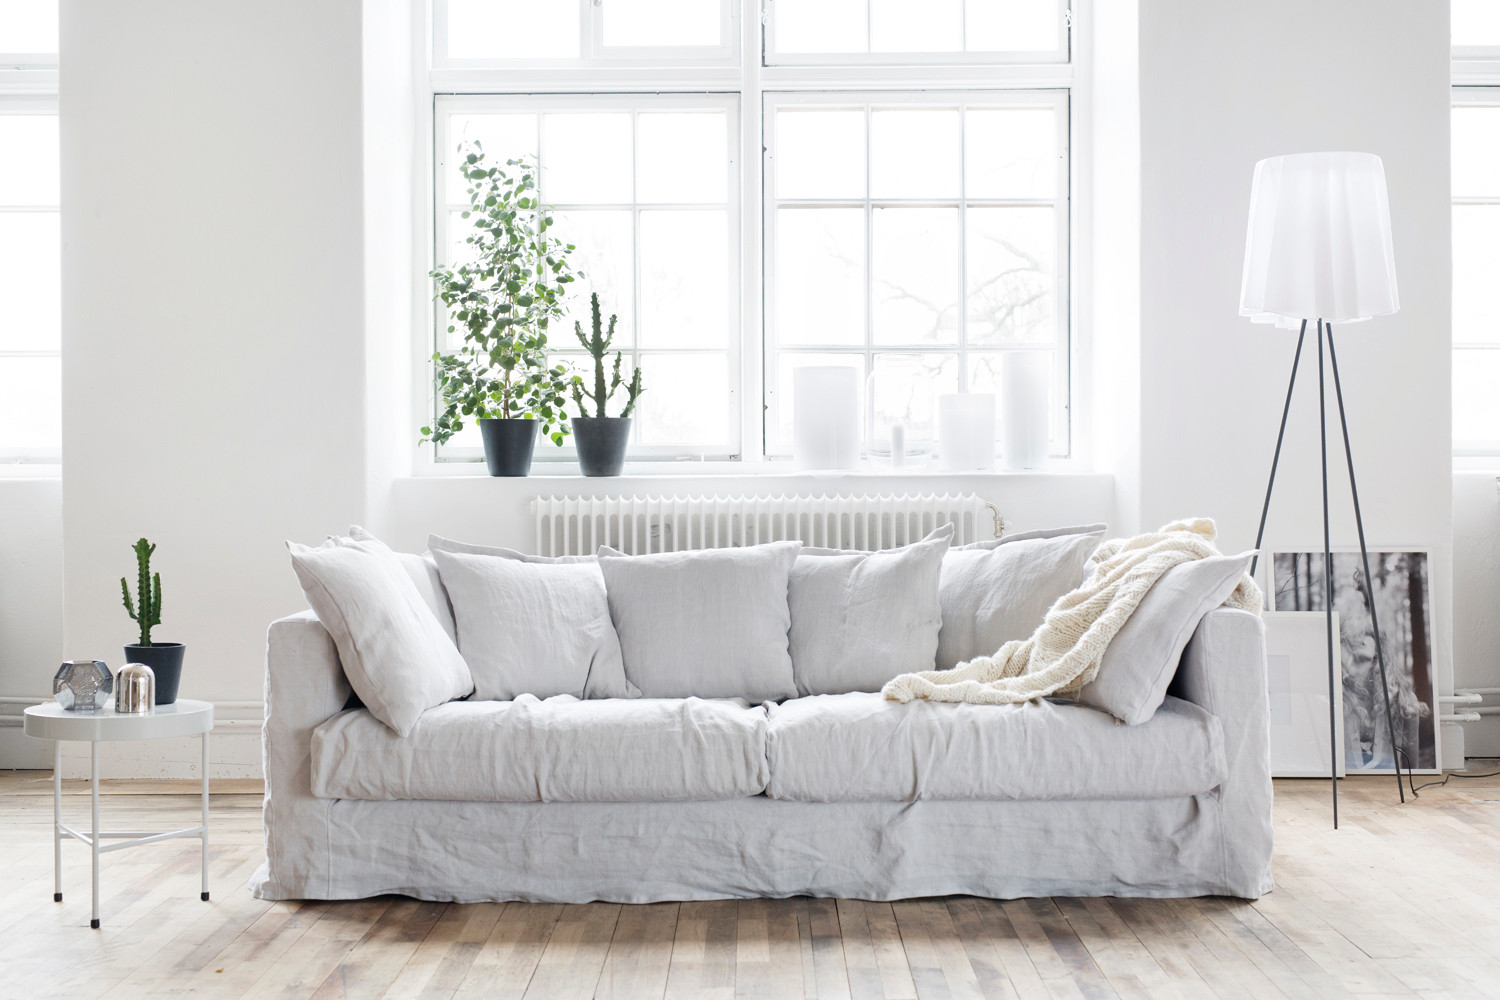 Le Grand Air sofa, Misty grey - Decotique - Gothenburg - by Rum21.se | Houzz